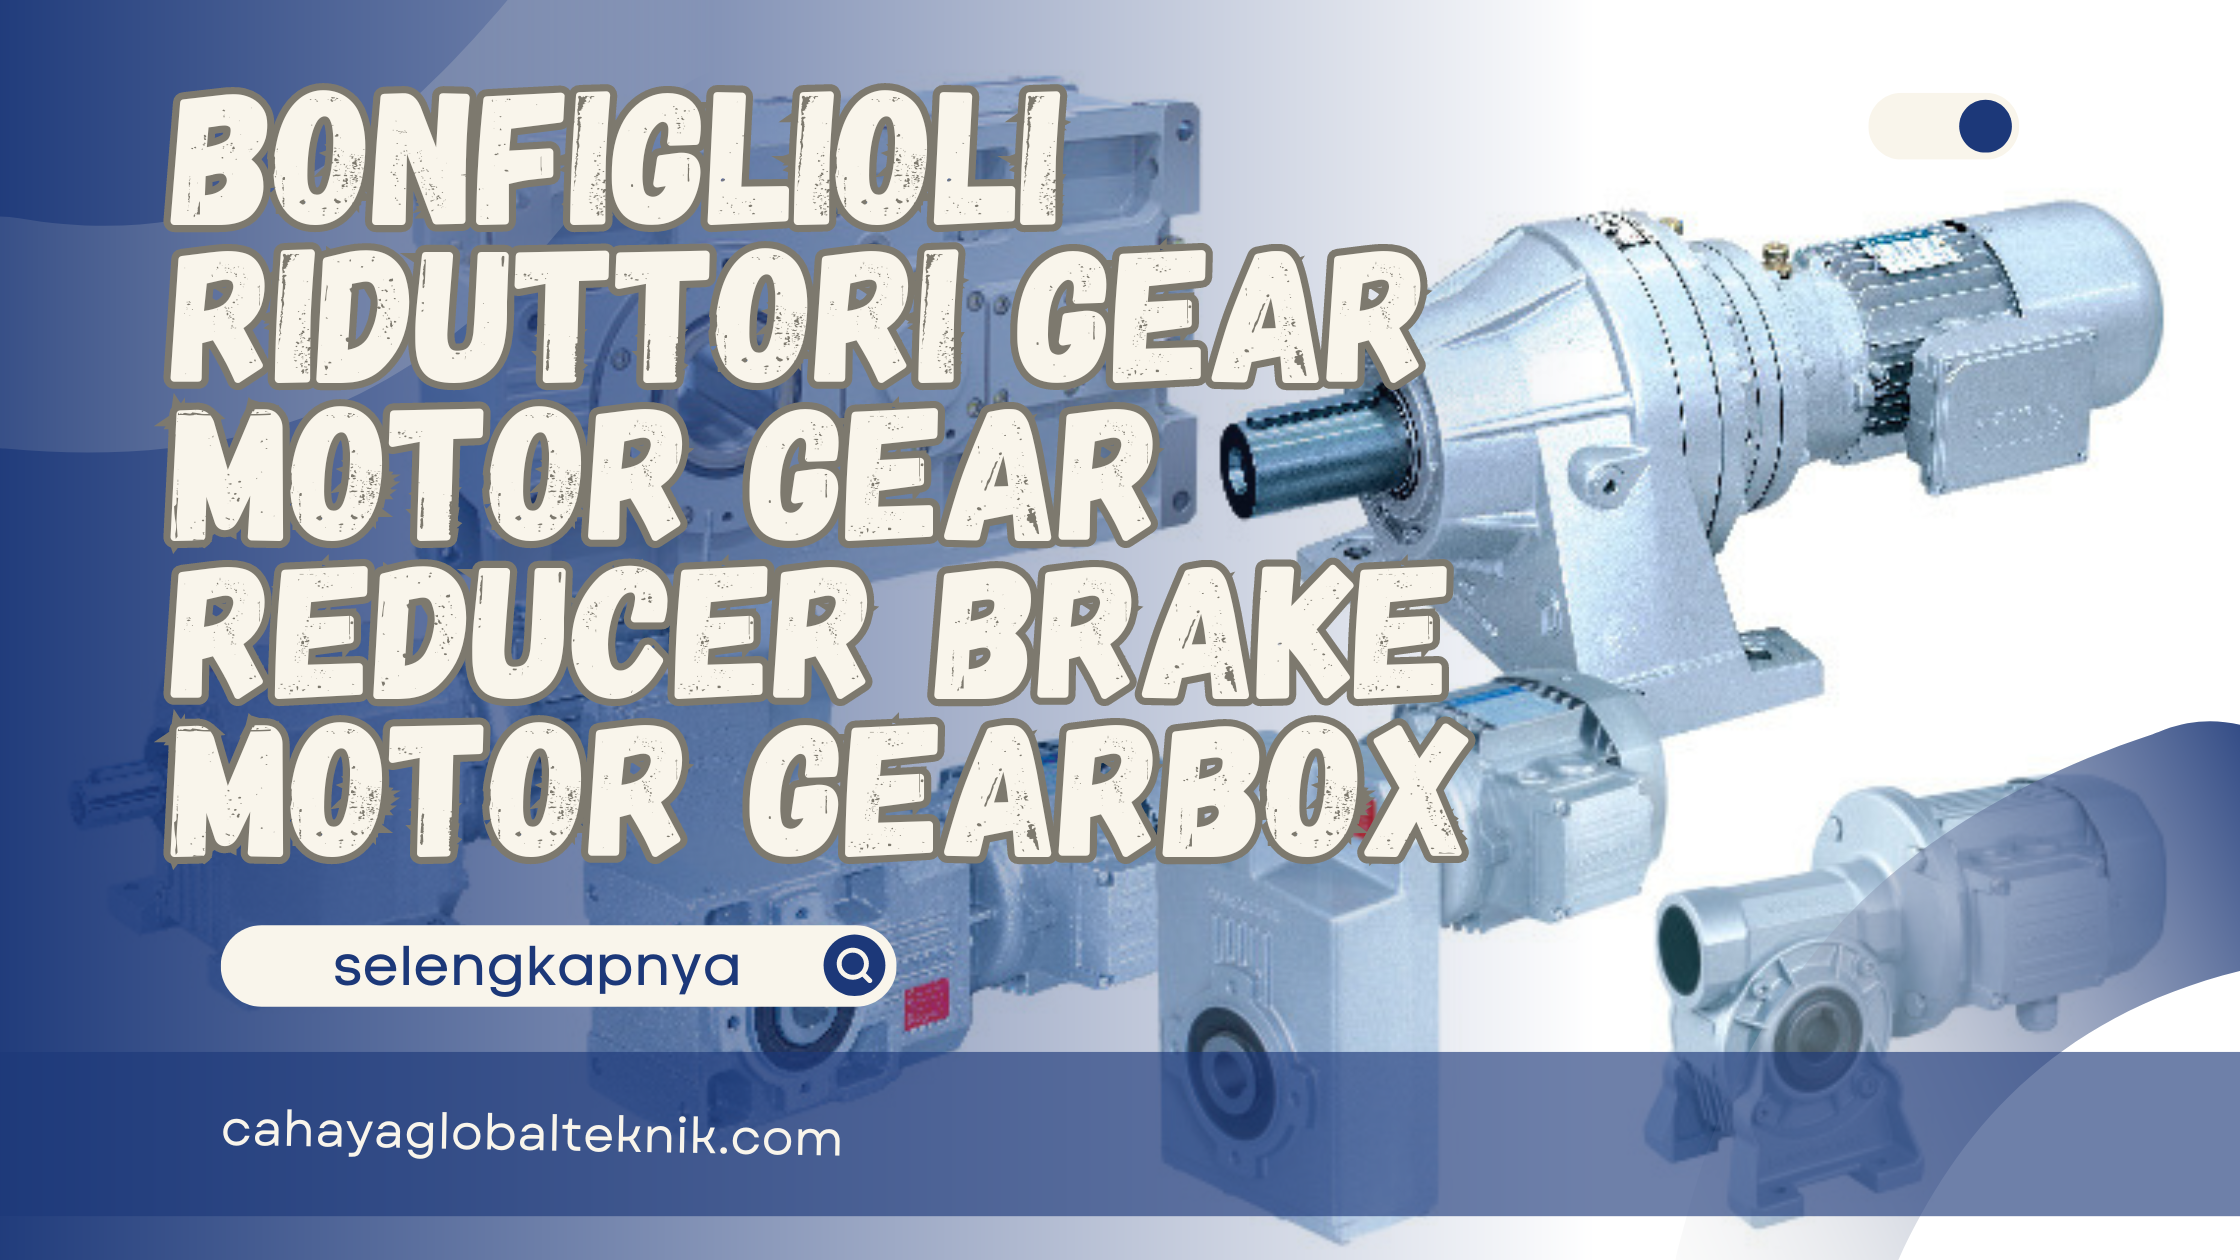 Bonfiglioli Riduttori Gear Motor Gear Reducer Brake Motor Gearbox